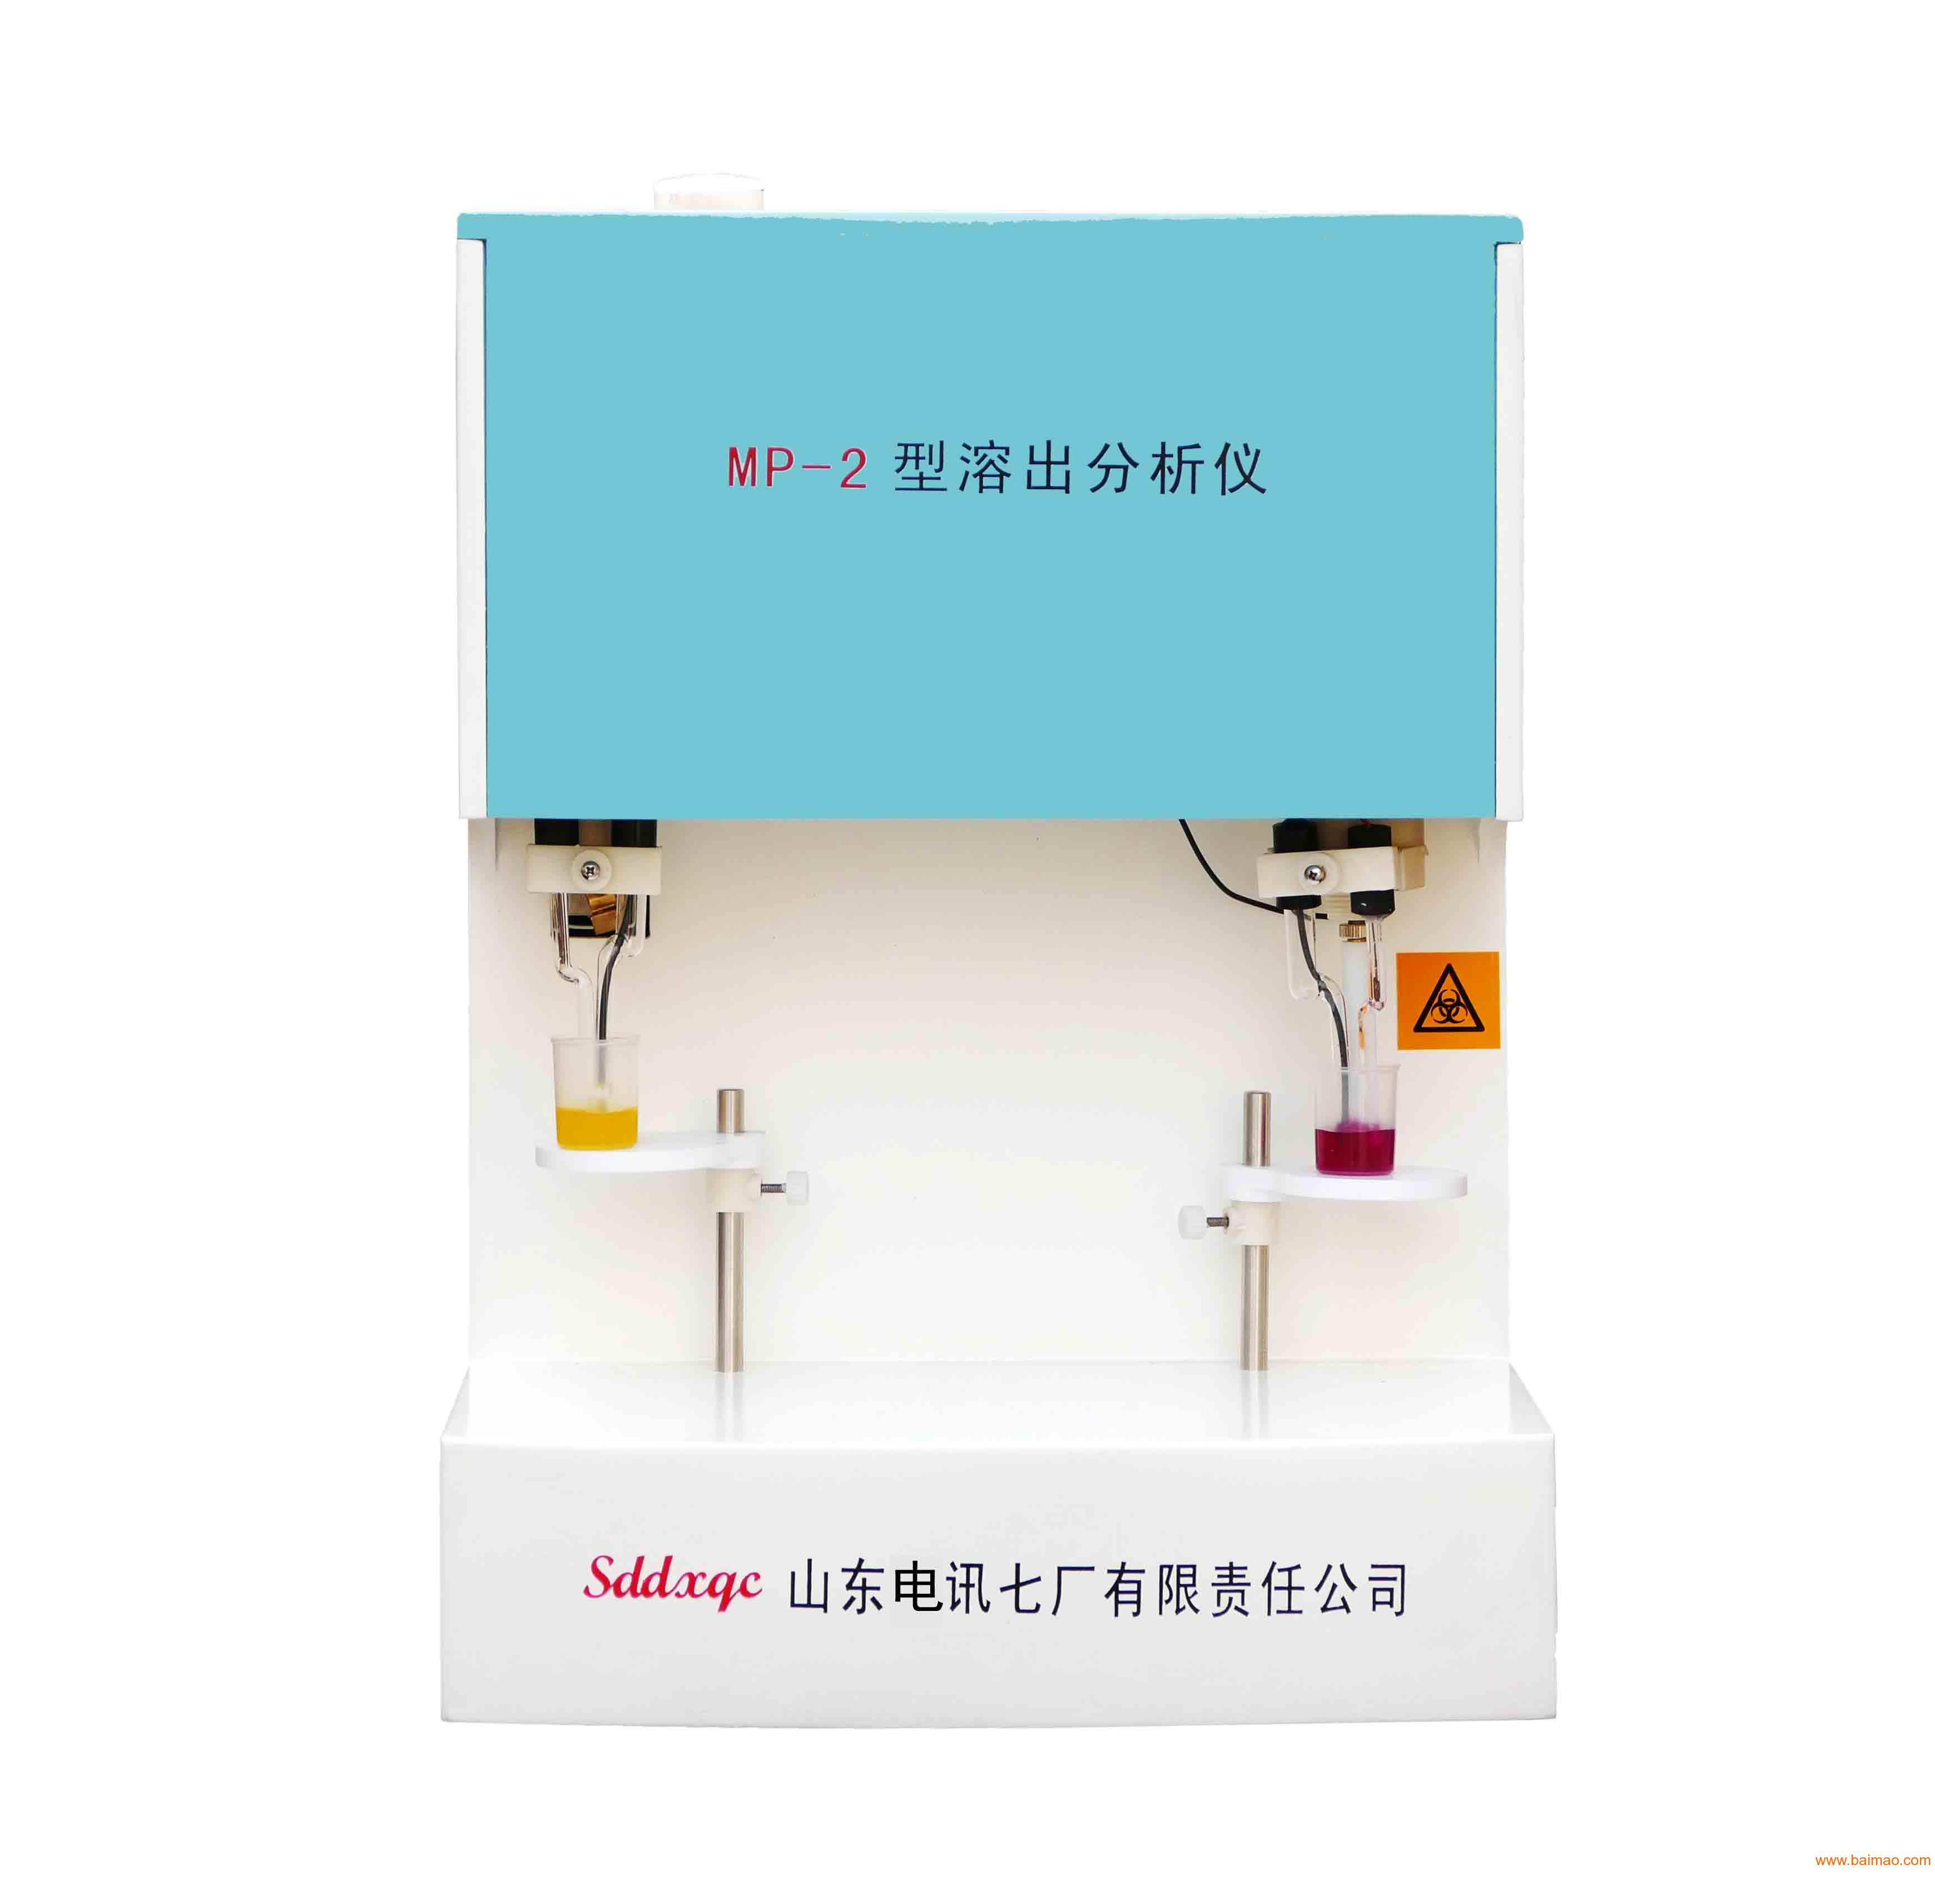 MP-2型溶出分析仪(A型)元素分析仪